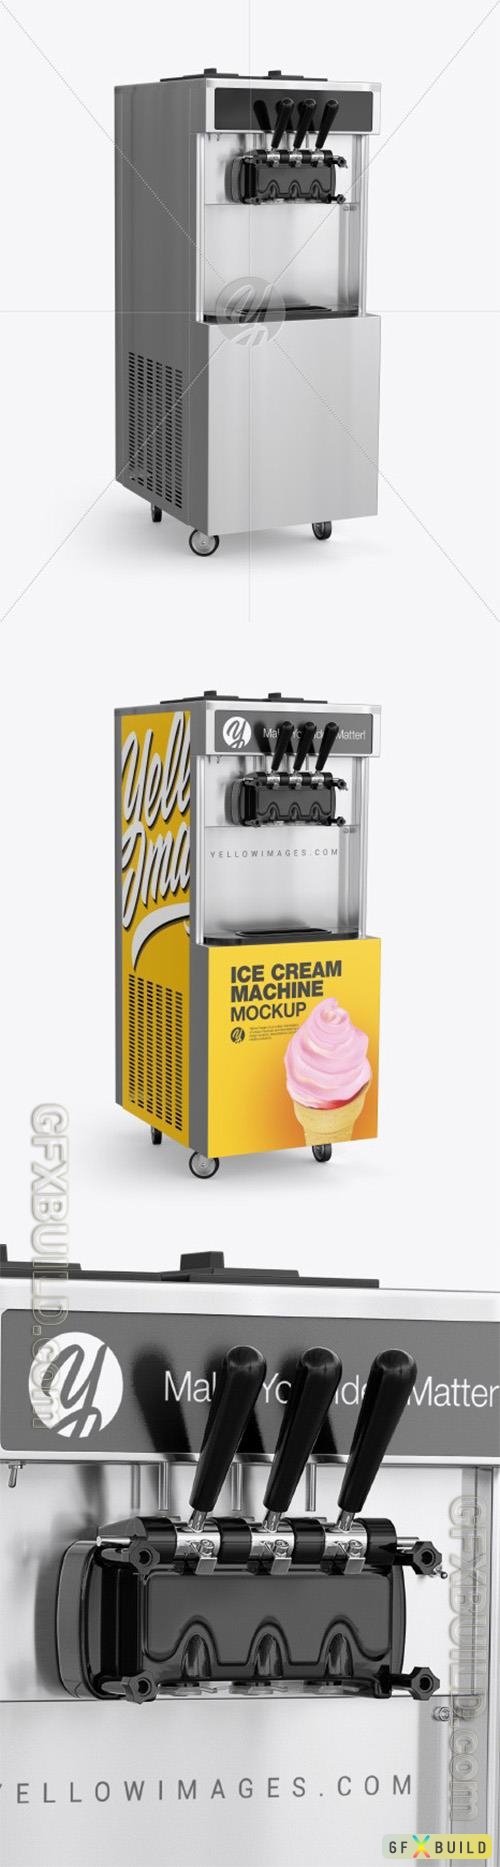 Ice Cream Machine Mockup - Half Side View 36124